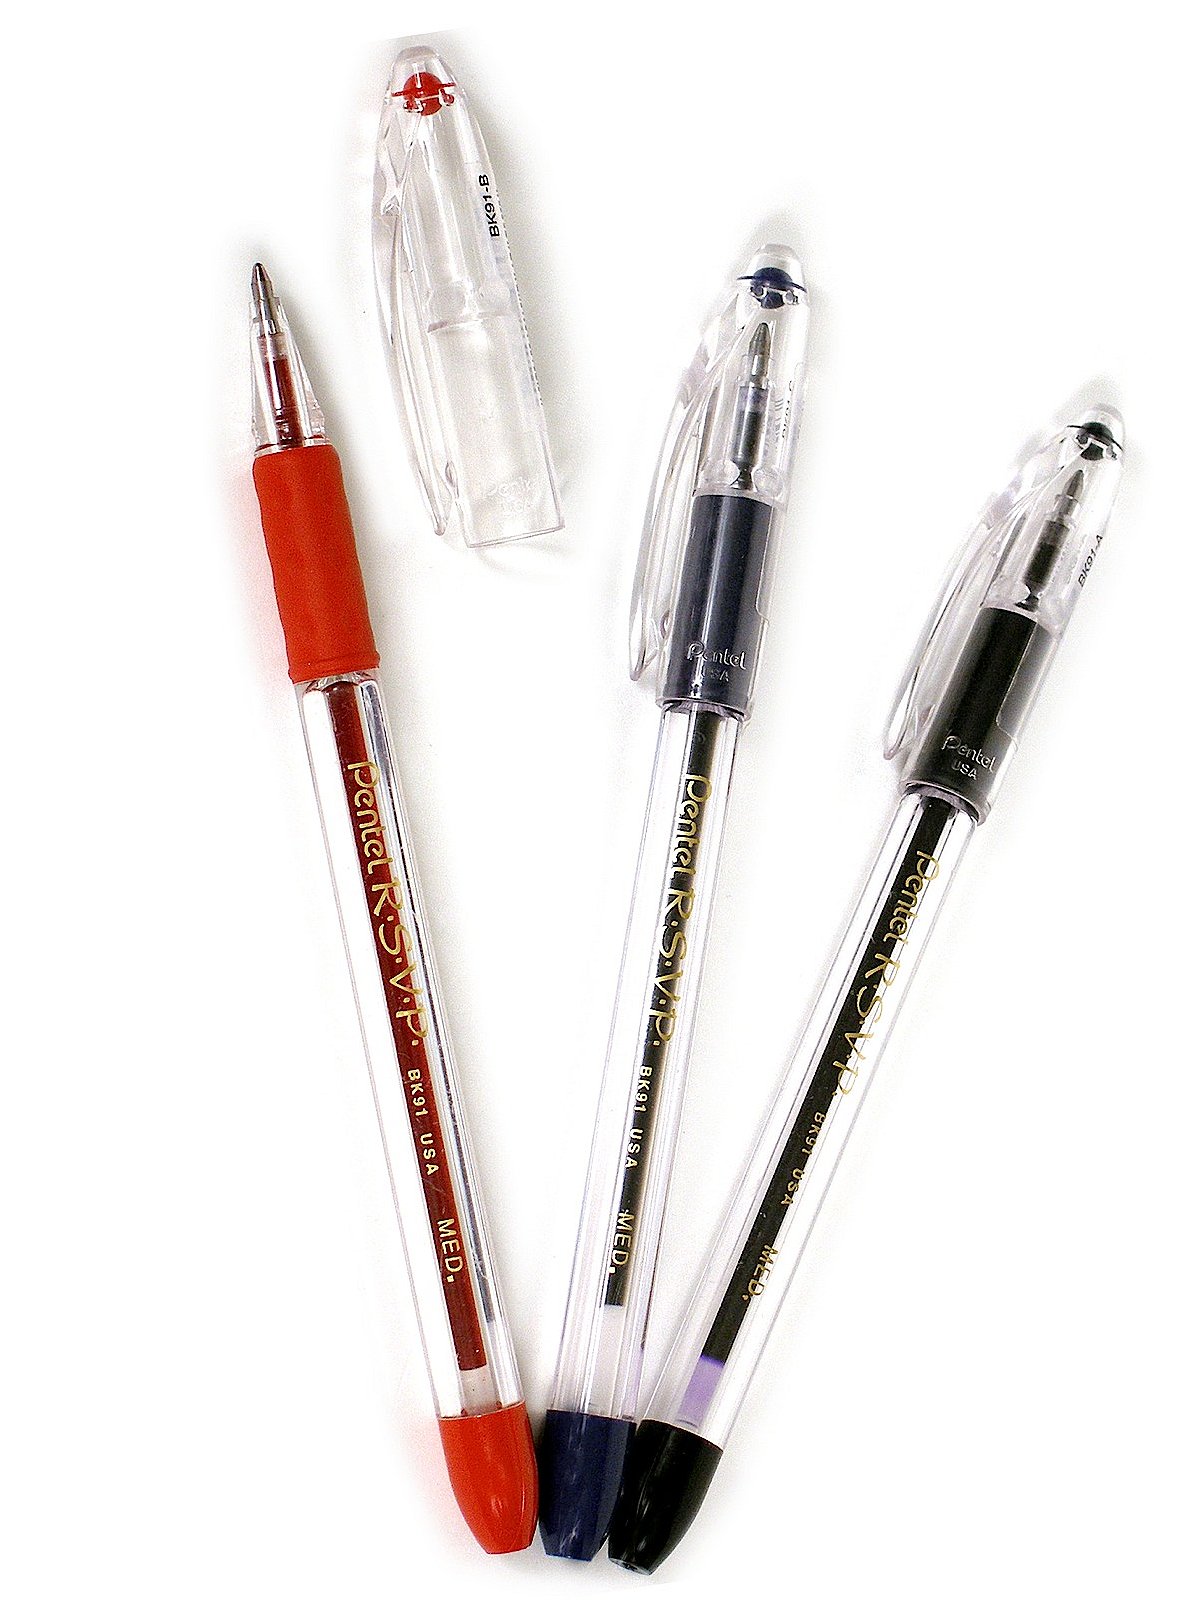 Pentel R.S.V.P. Fine Ballpoint Pens - Red Ink - Shop Pens at H-E-B